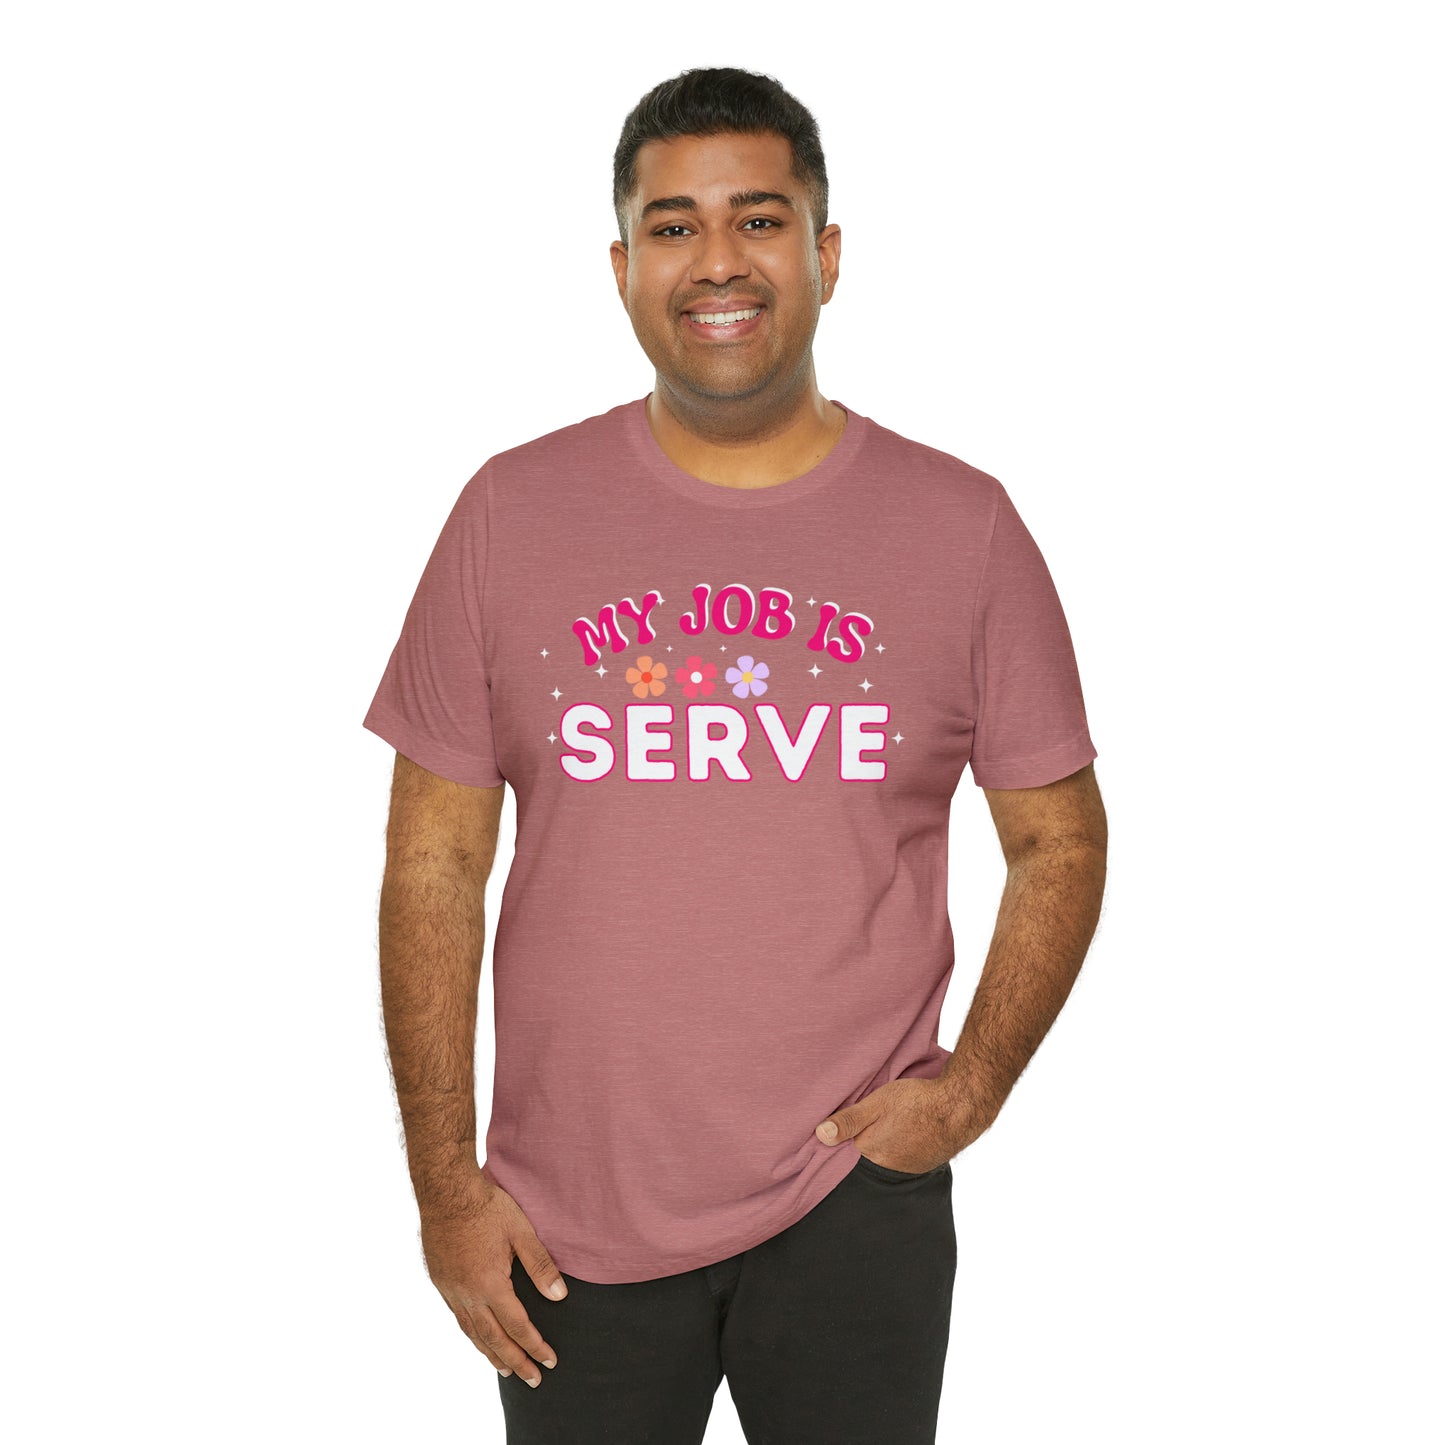 My Job is Serve Shirt for Military Customer Service Waiter/Waitress Public Servant, Hotel Concierge, Caterer, Flight Attendant, Bartender Barista